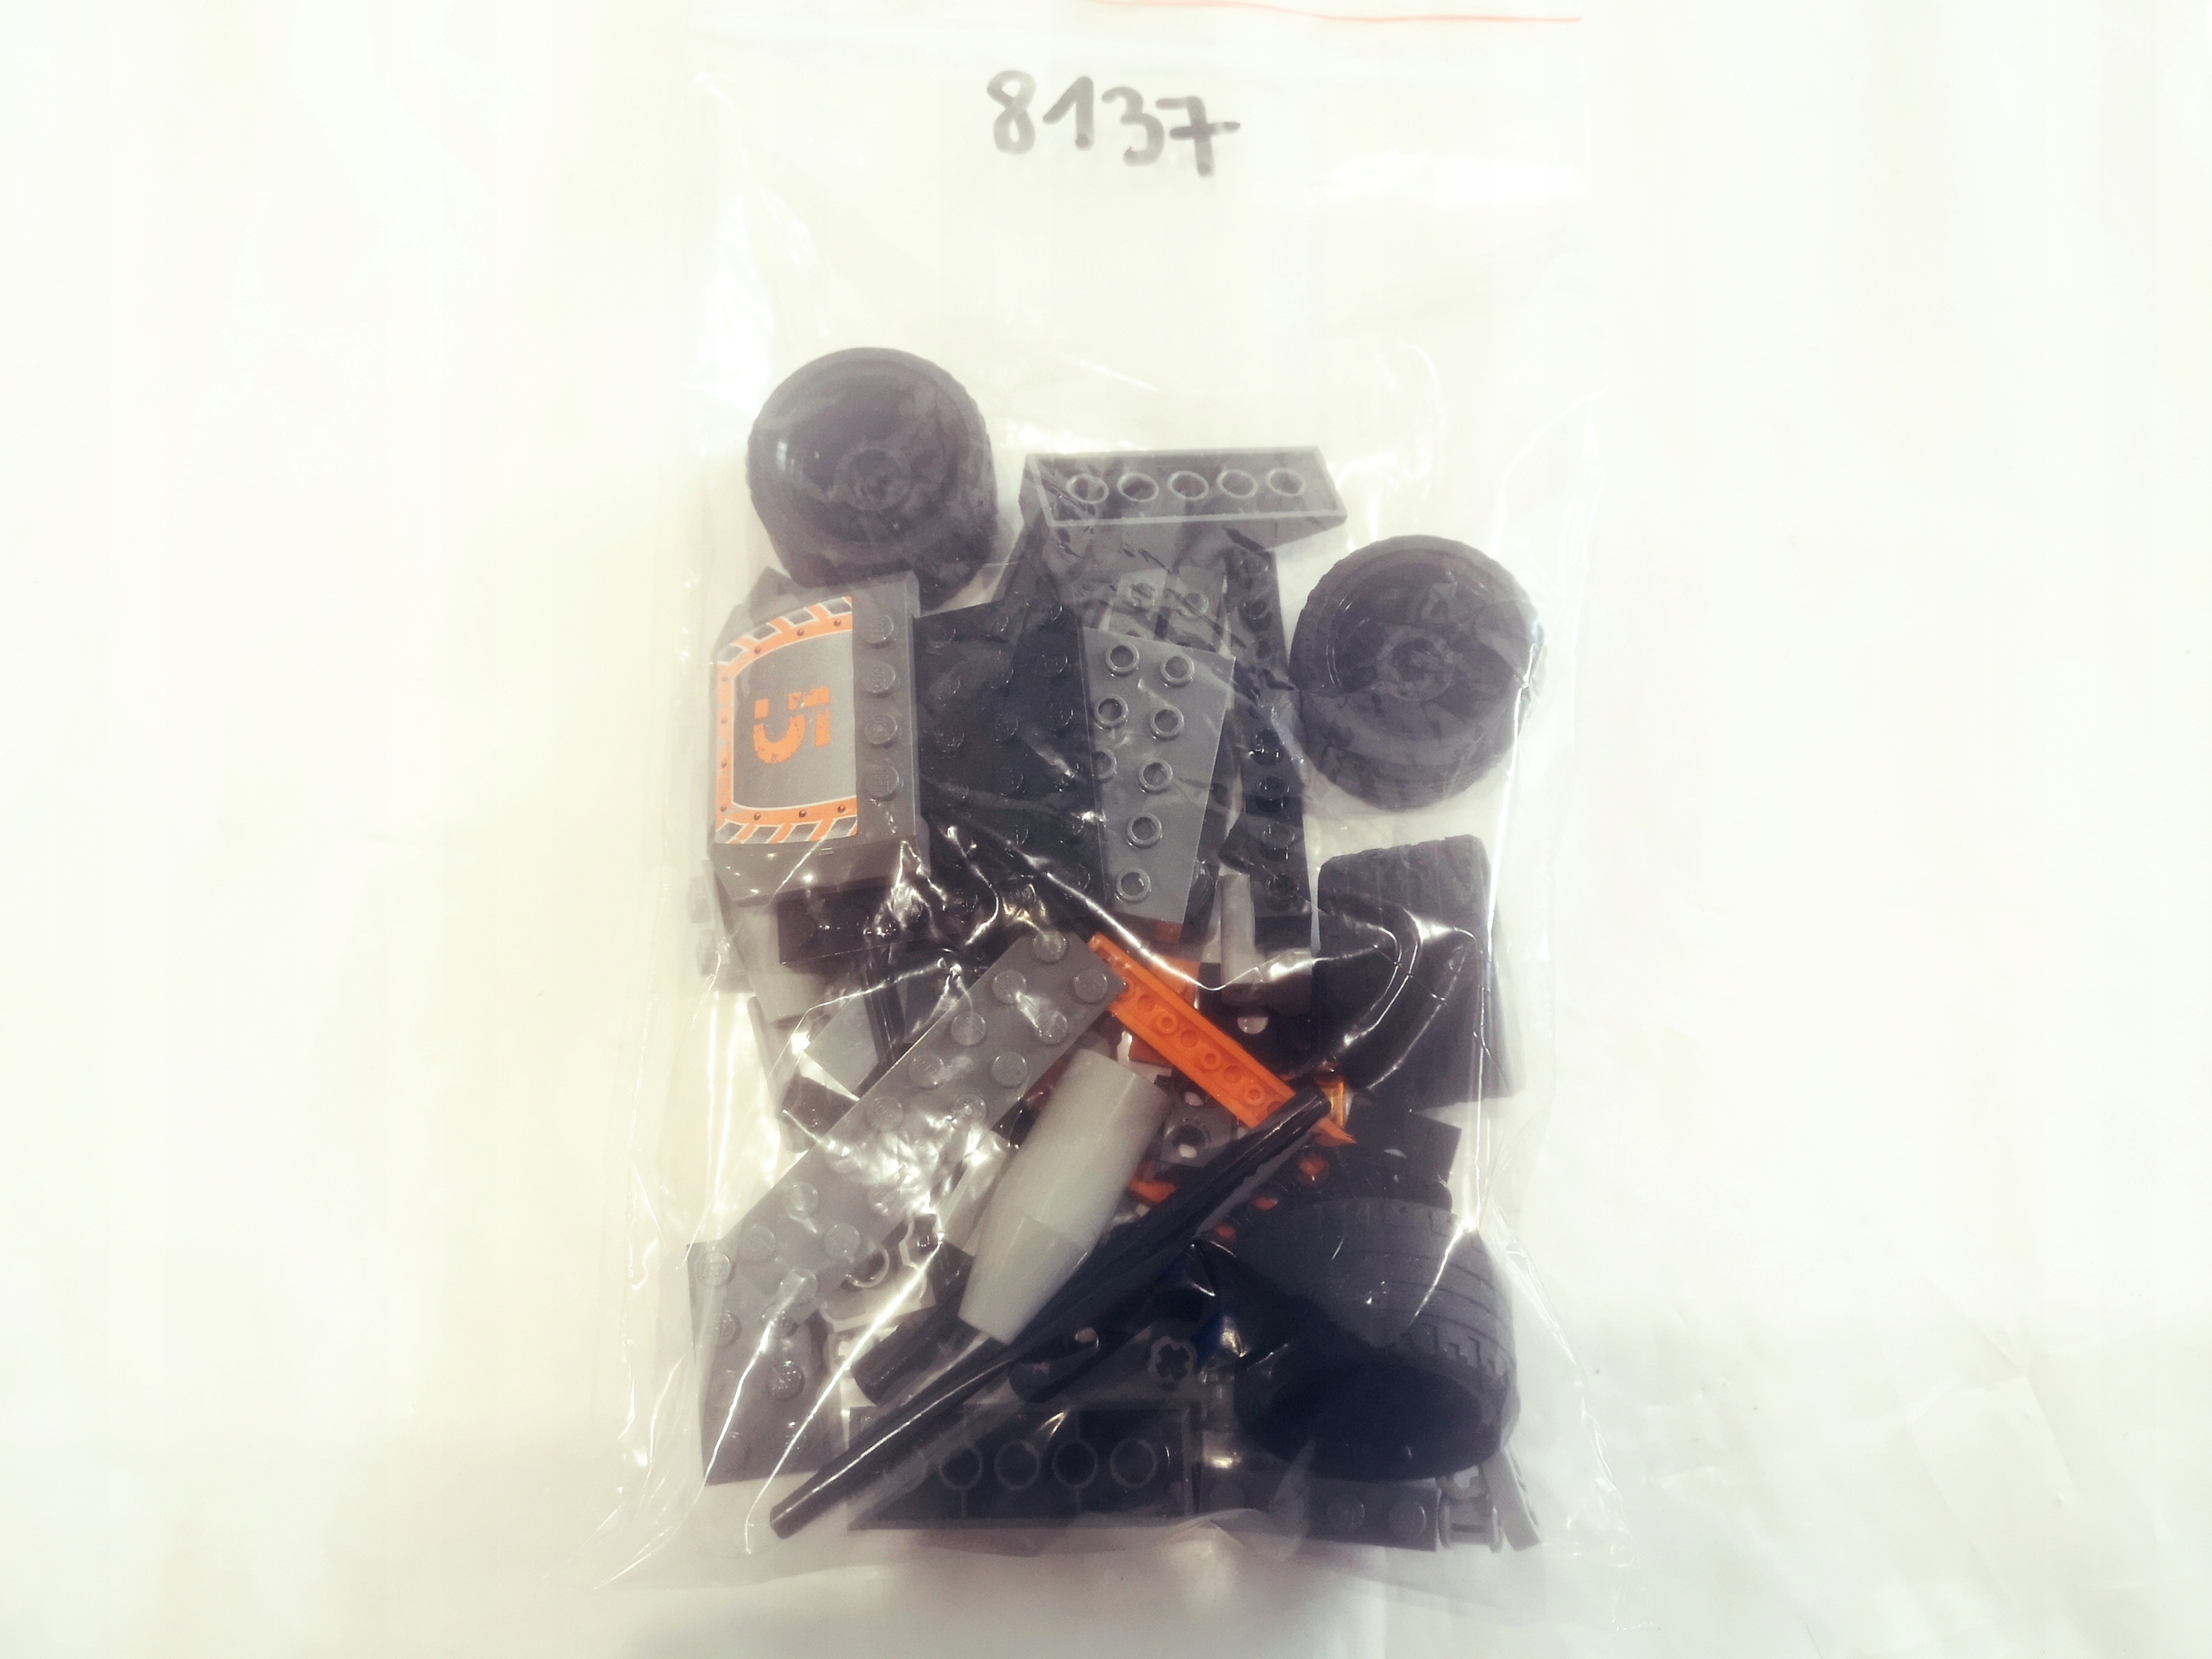 LEGO 8137 Racers - Booster Beast Použité 152 od Imielin Allegro - (13203043624)